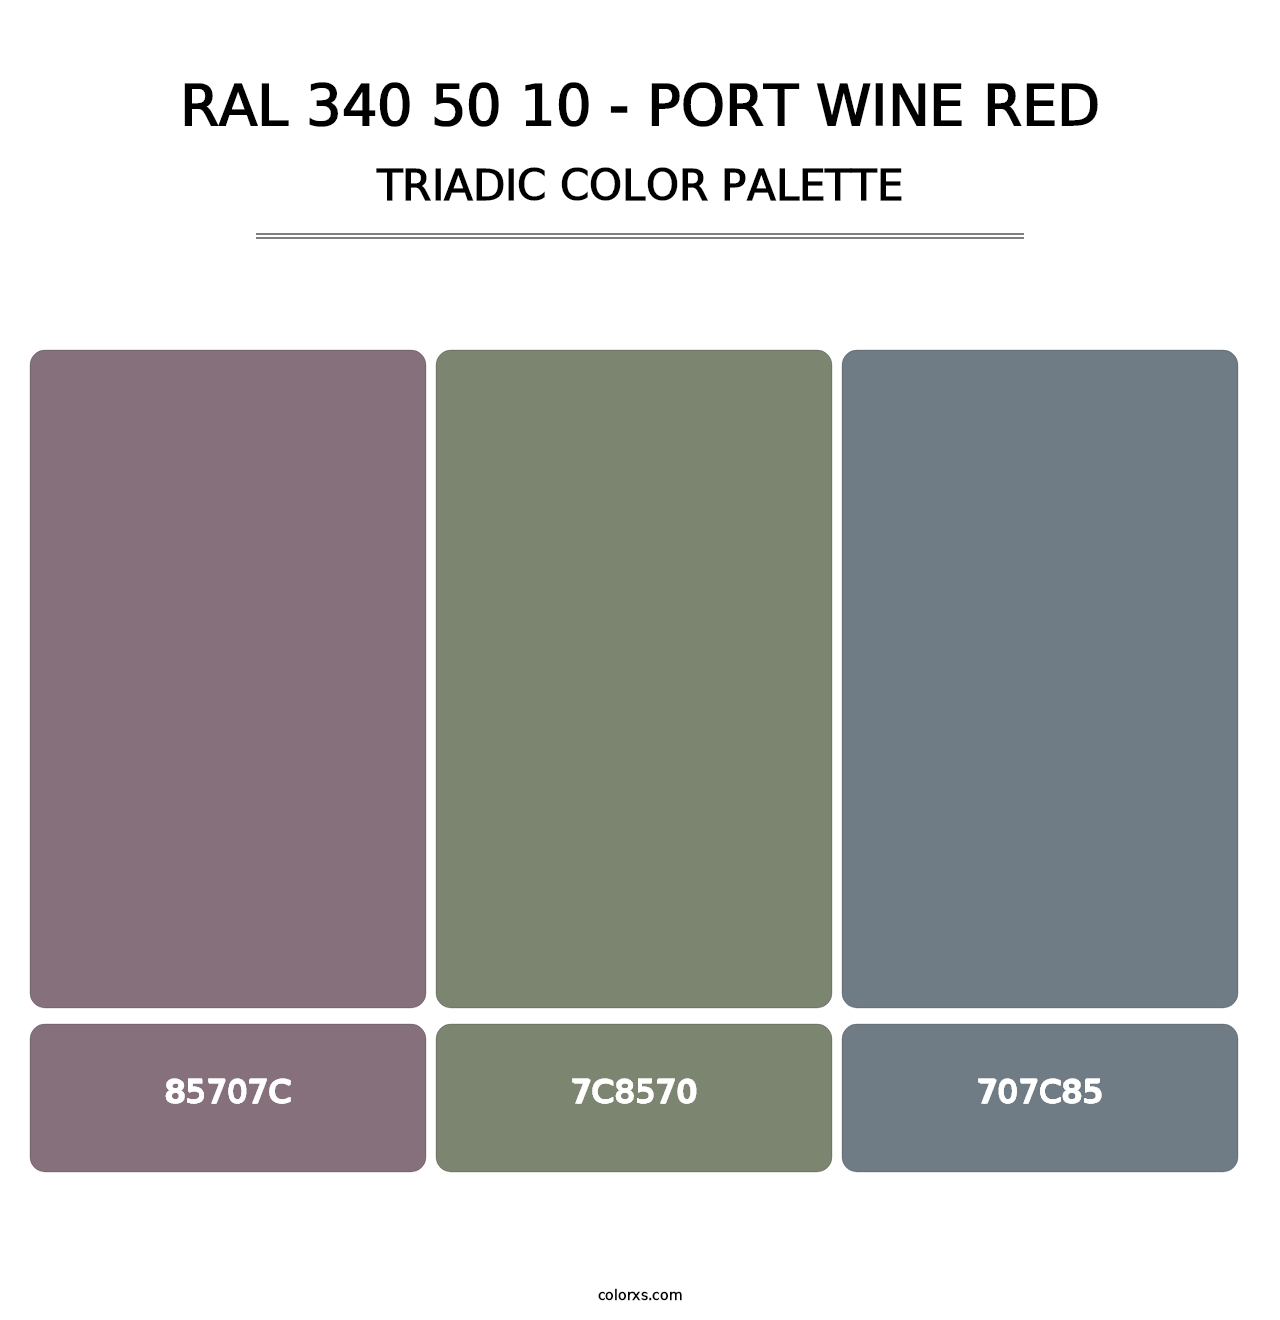 RAL 340 50 10 - Port Wine Red - Triadic Color Palette